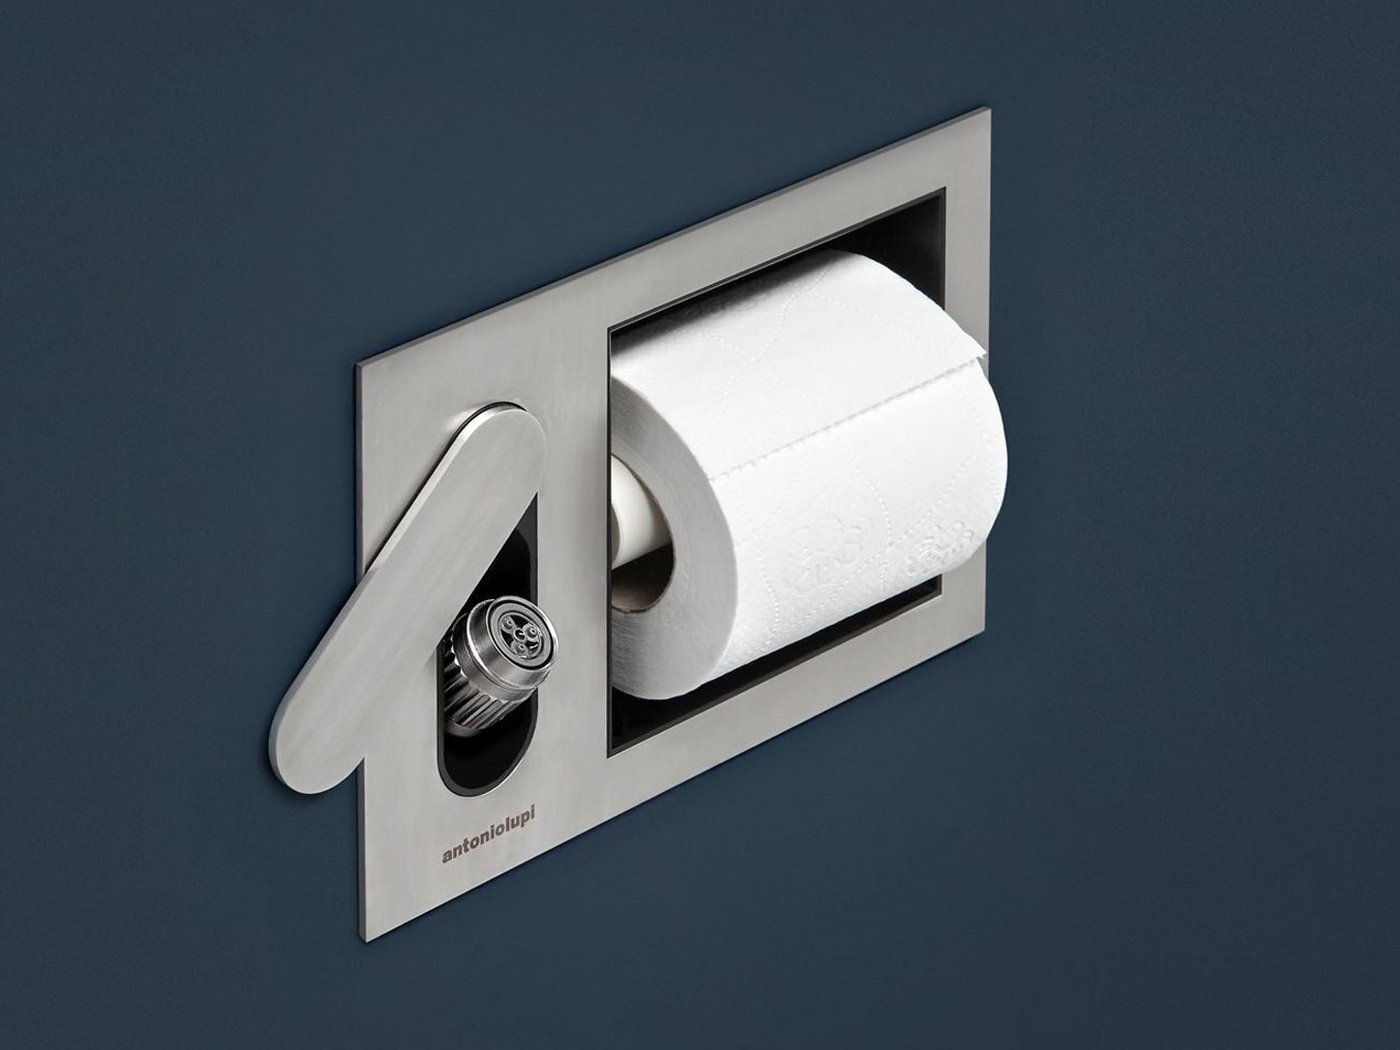 antoniolupi, Carteintenso Hygienic shower + paper roll holder